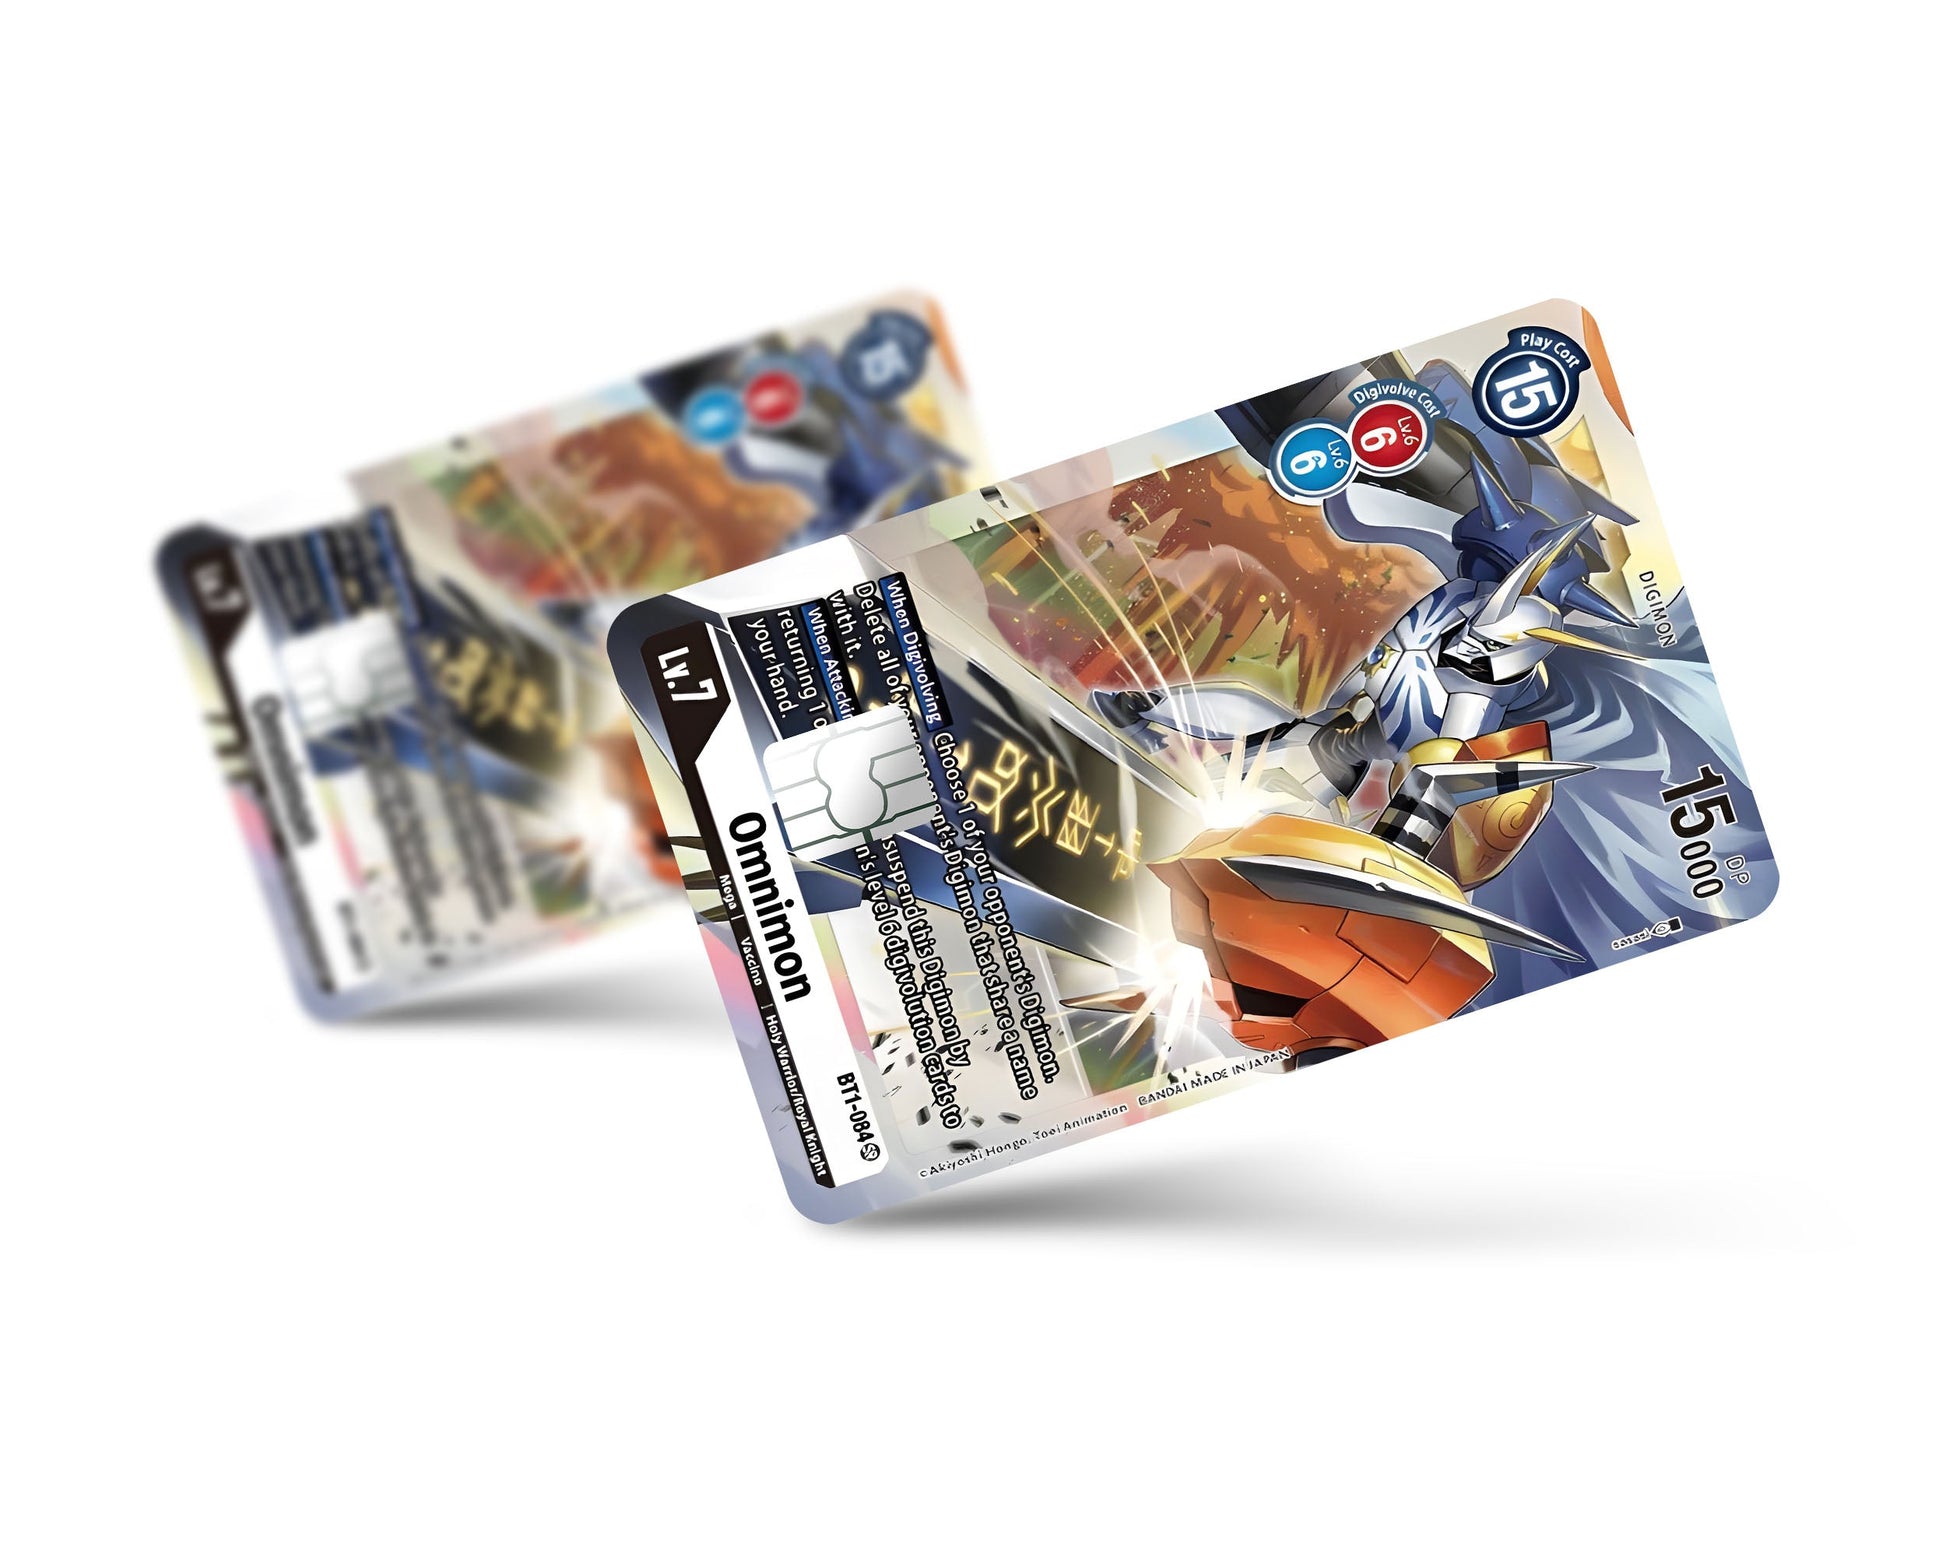 Omnimon Limited Edition Digimon Card Credit Card Credit Card Skin